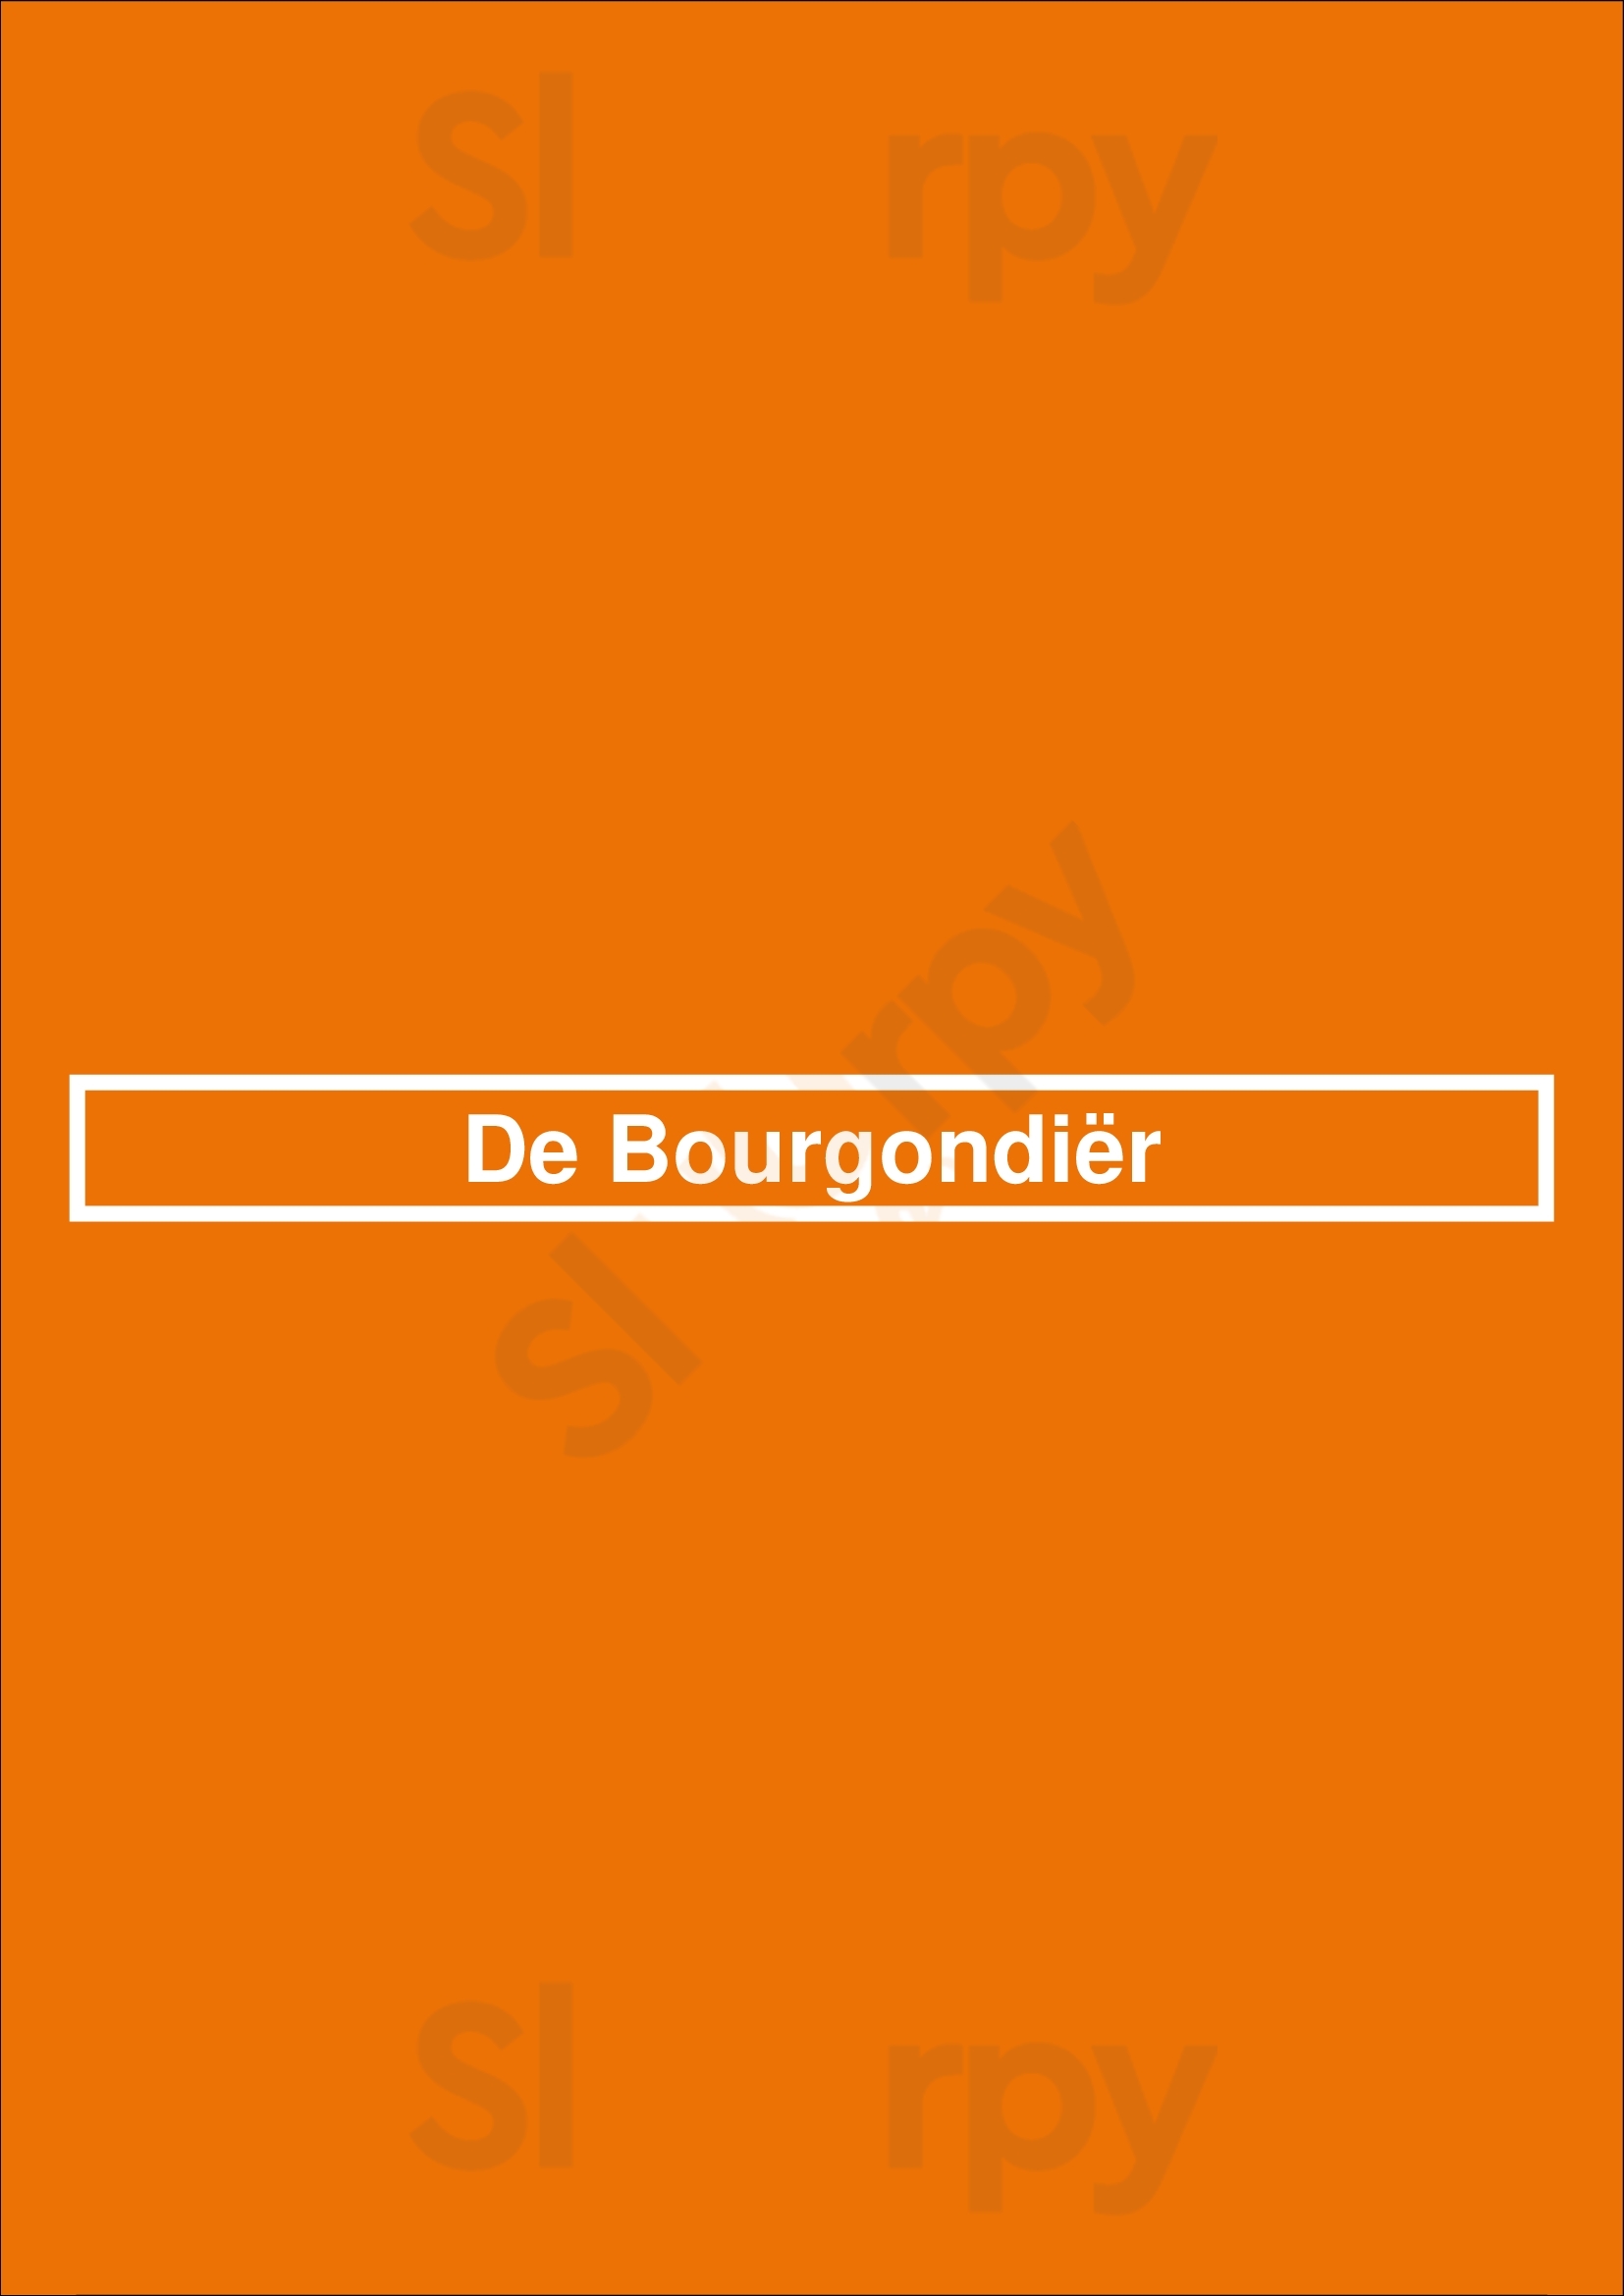 De Bourgondiër Hengelo Menu - 1